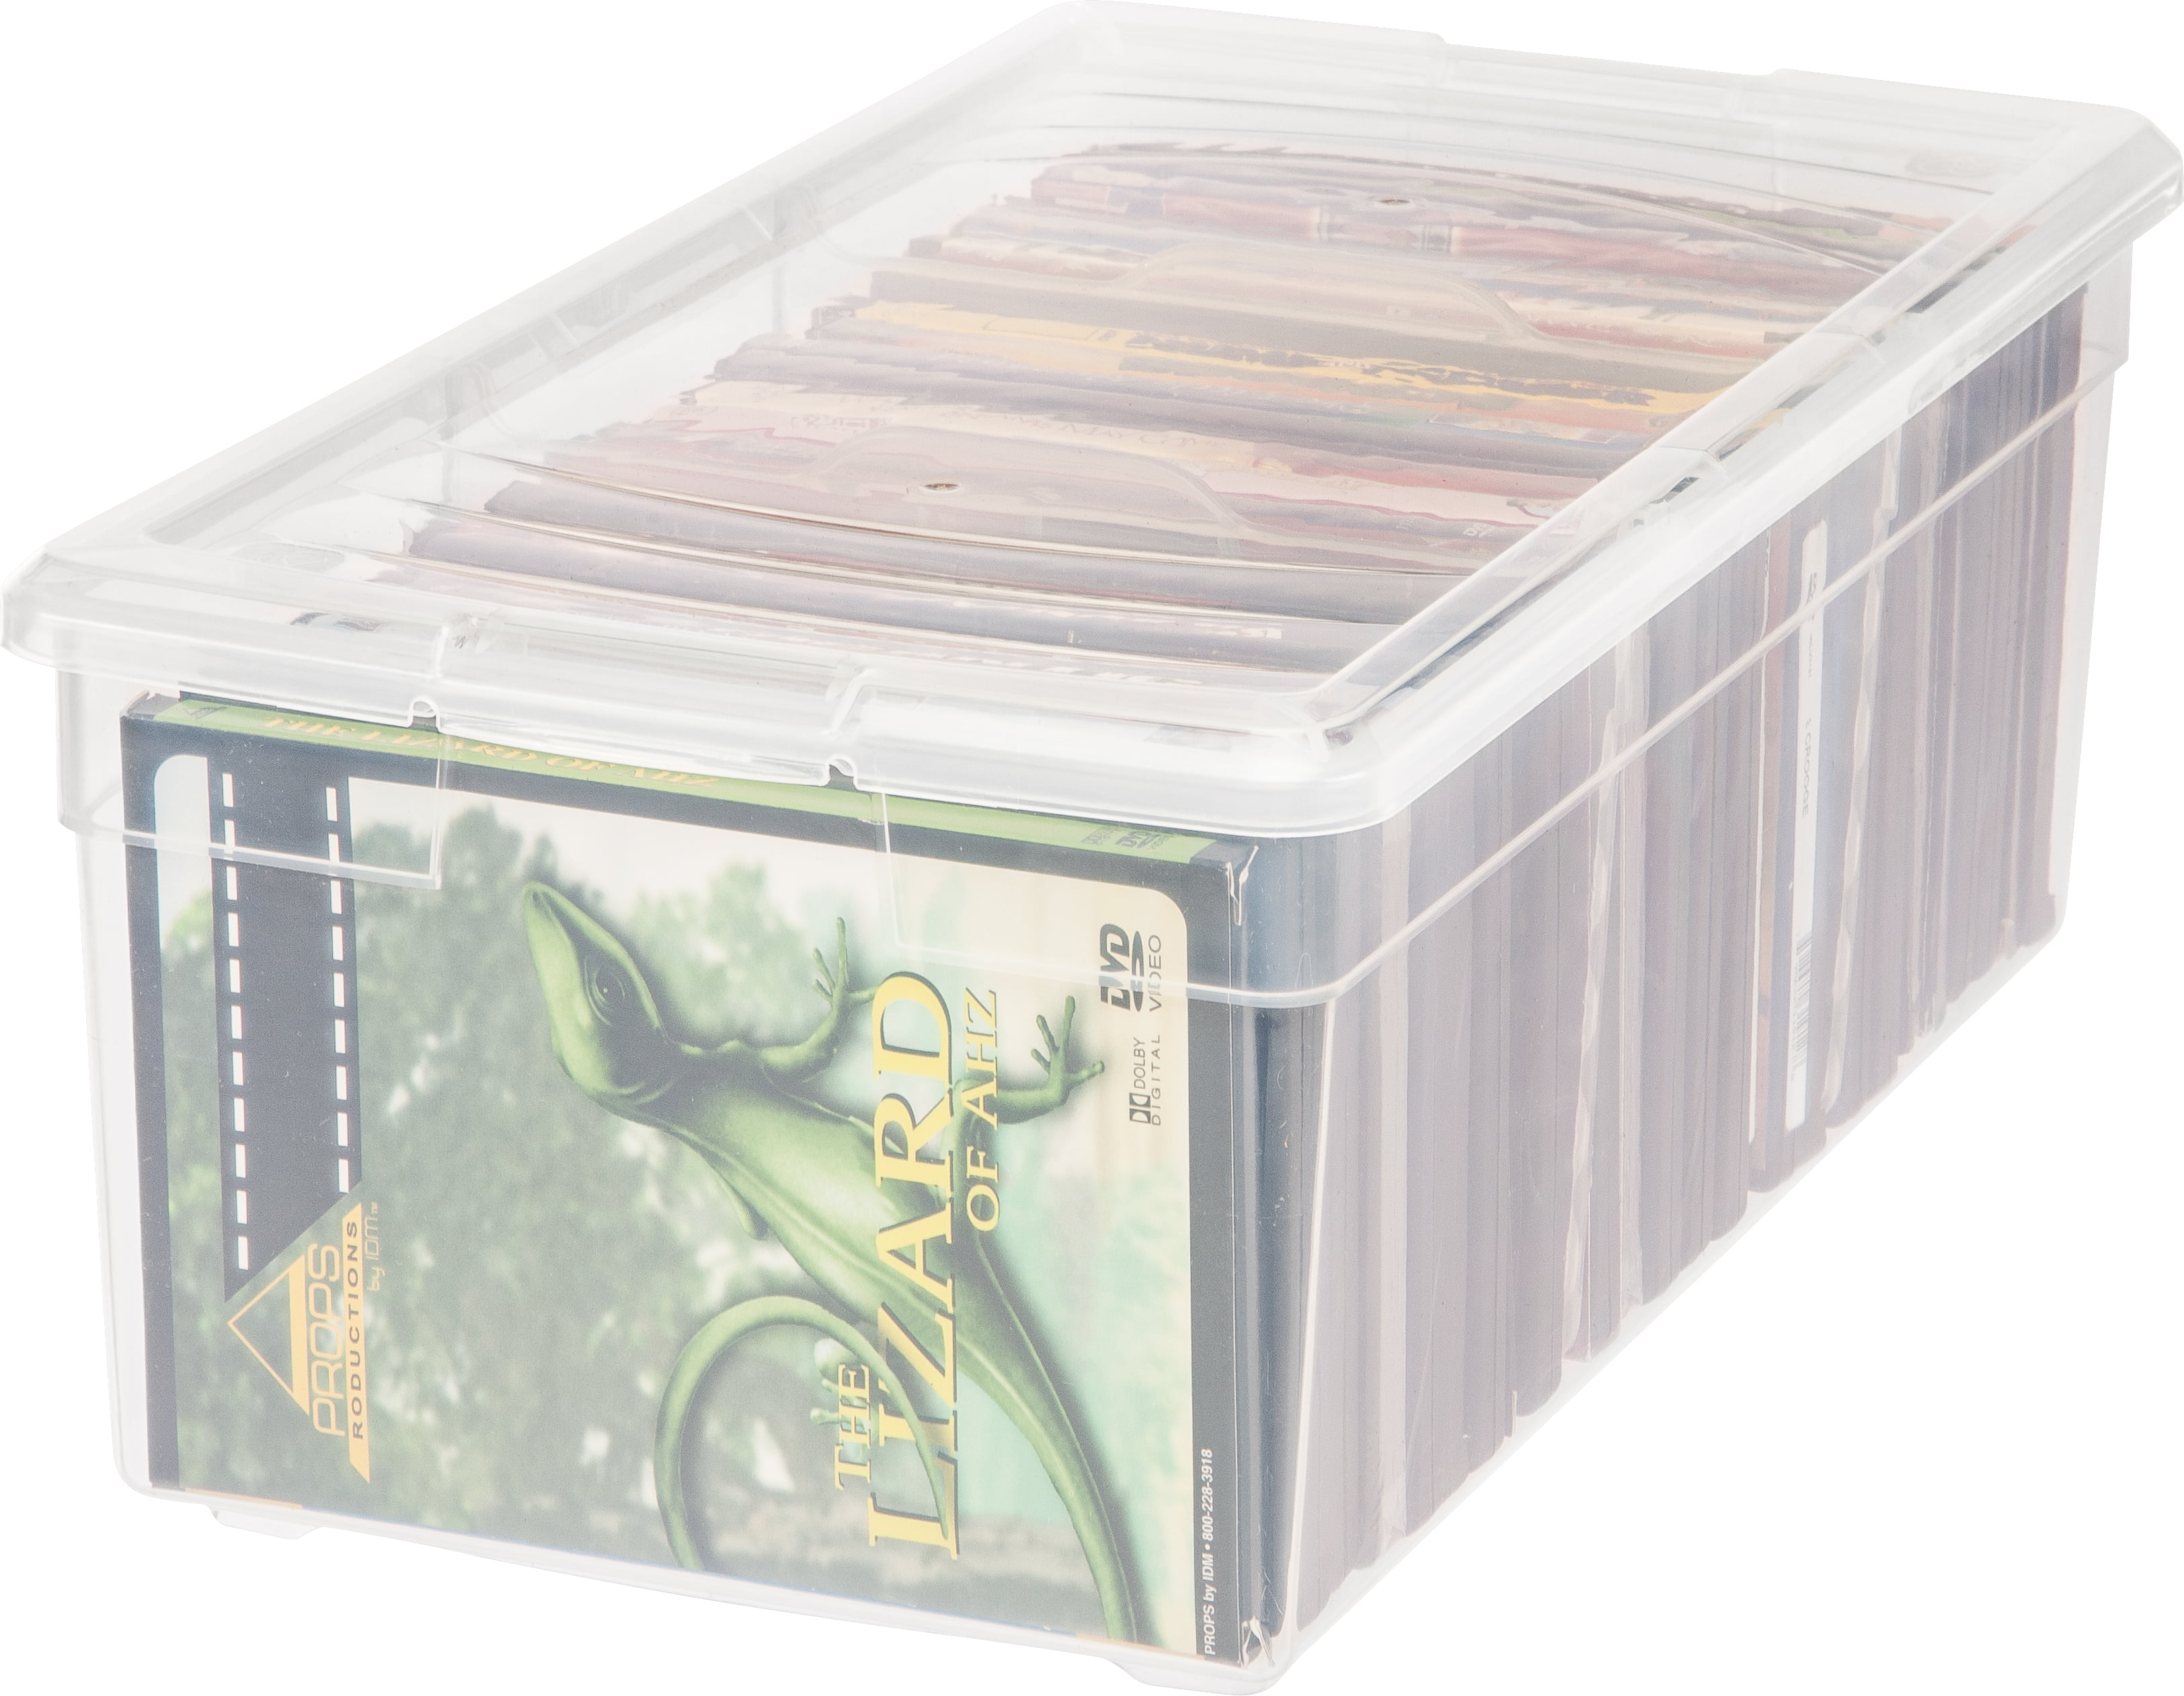 Iris Media Storage Box